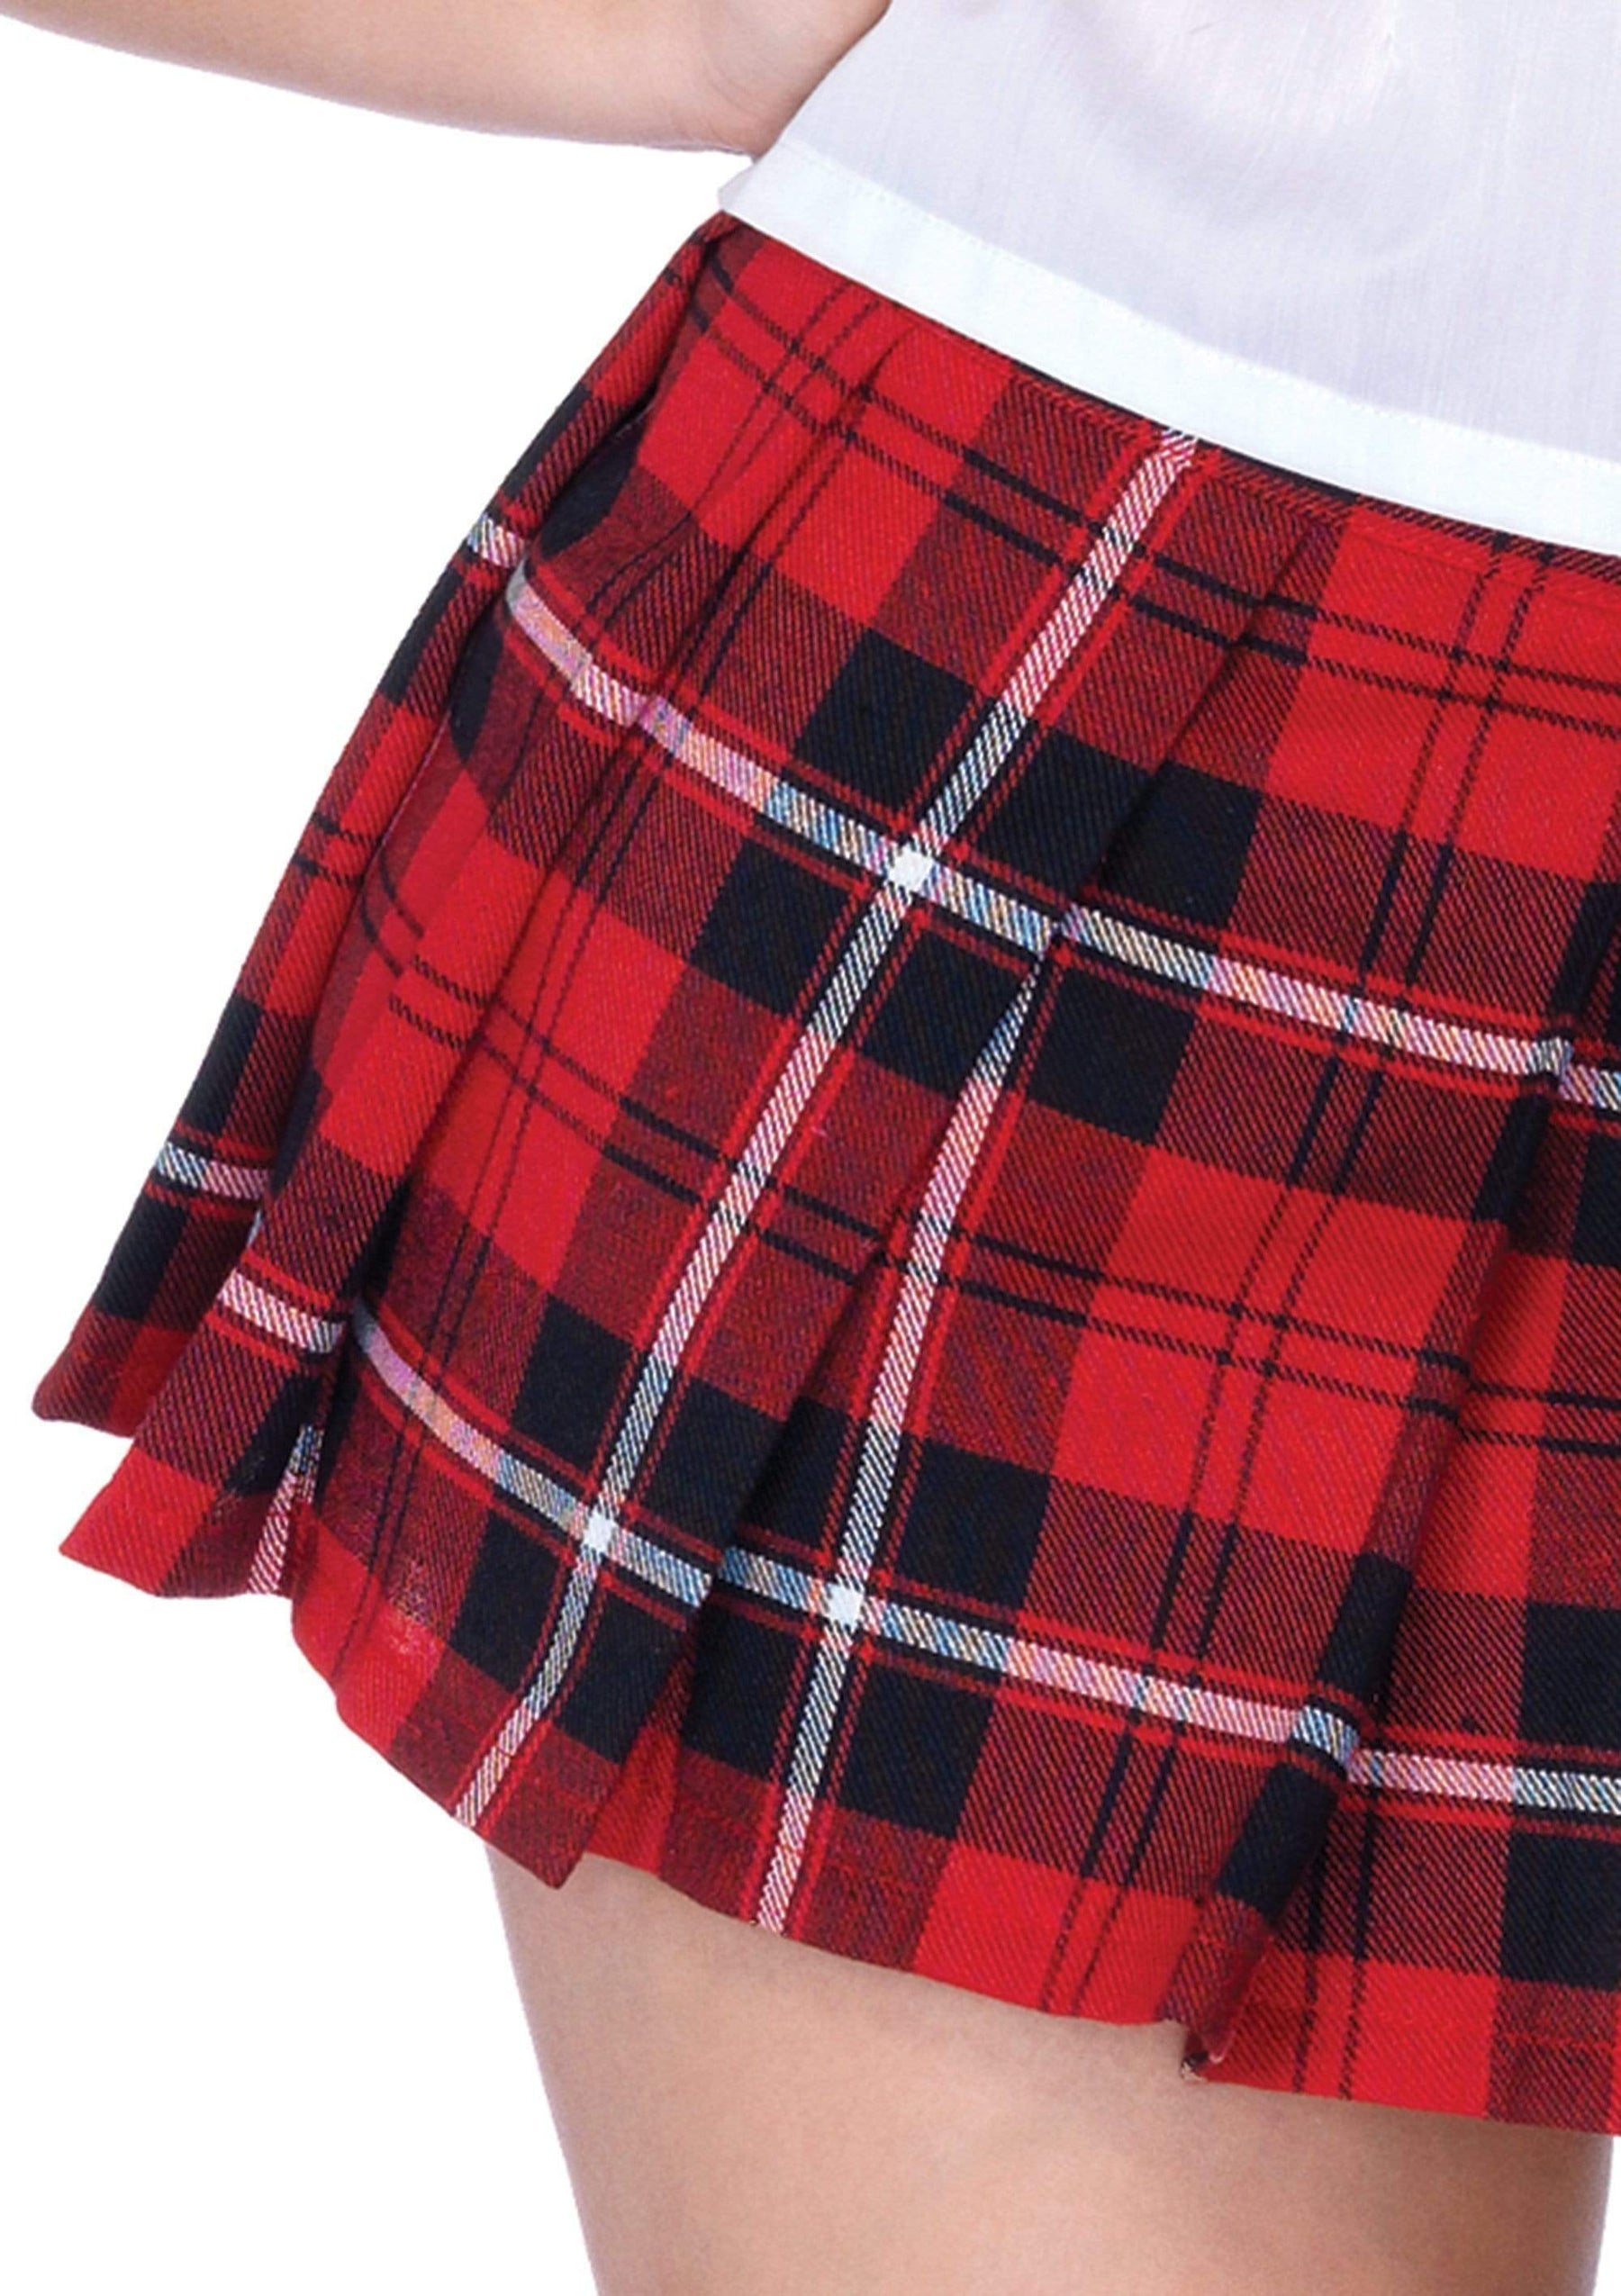 Private School Sweetie Plaid Skirt Schoolgirl Adult Costume